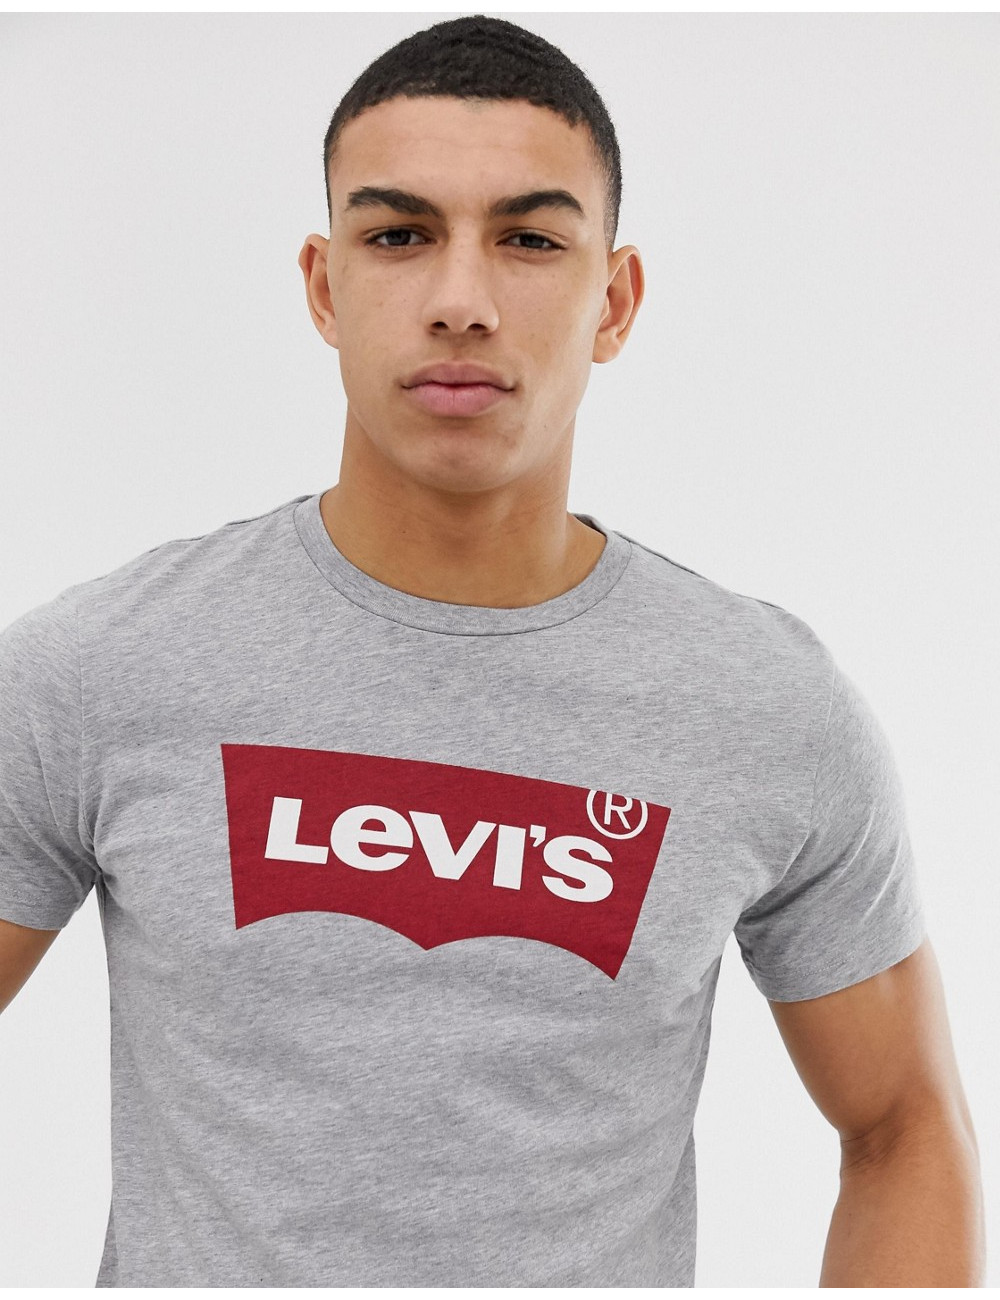 Levi's t-shirt batwing logo...